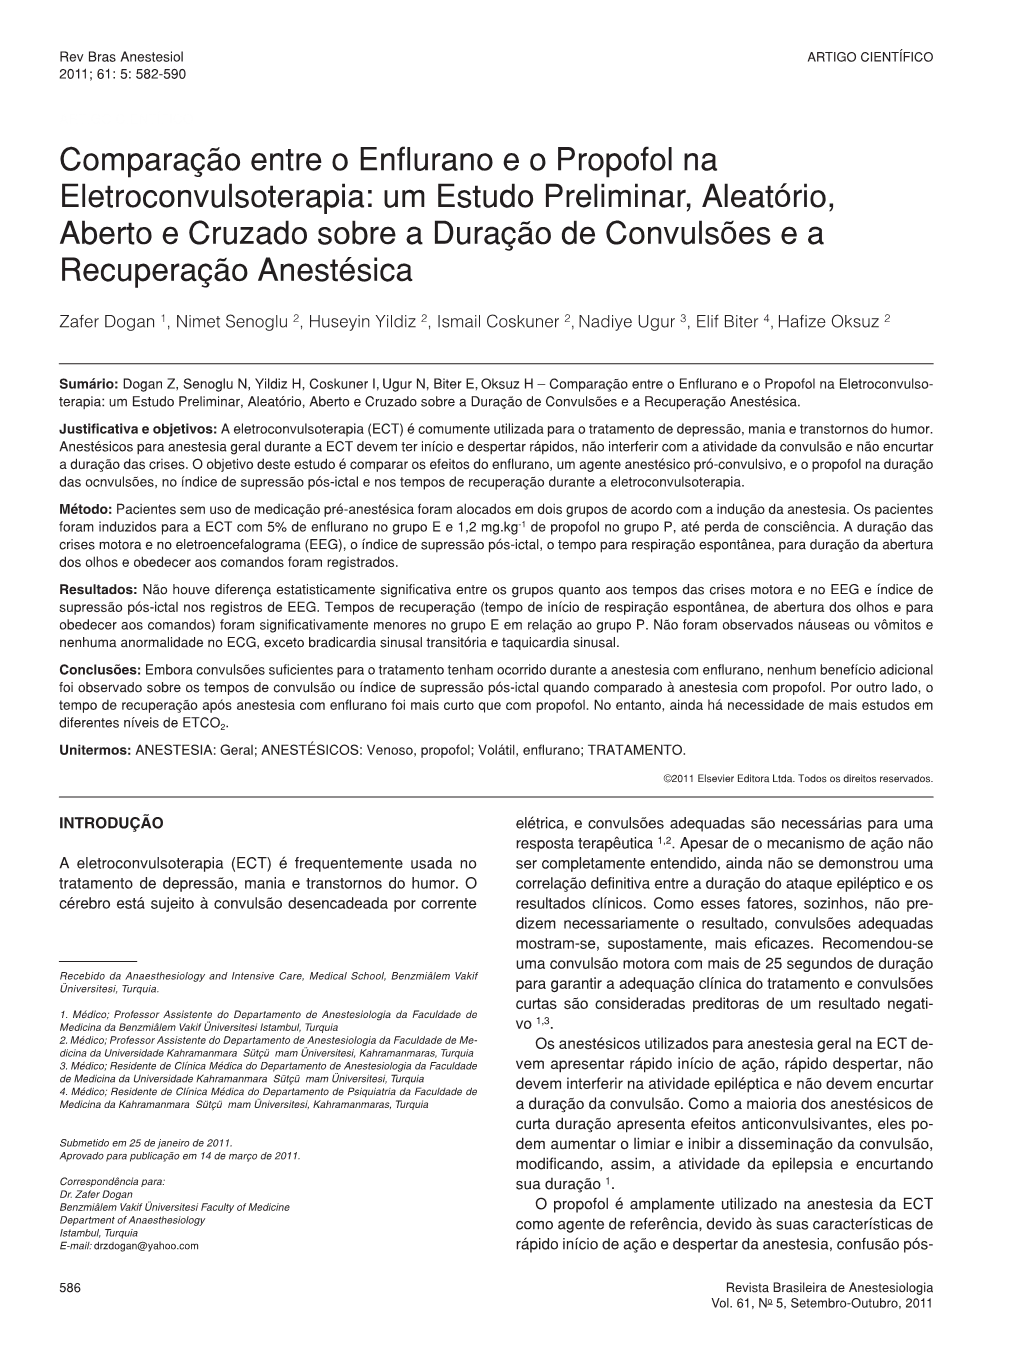 Comparison of Enflurane and Propofol in Electroconvulsive Therapy, A